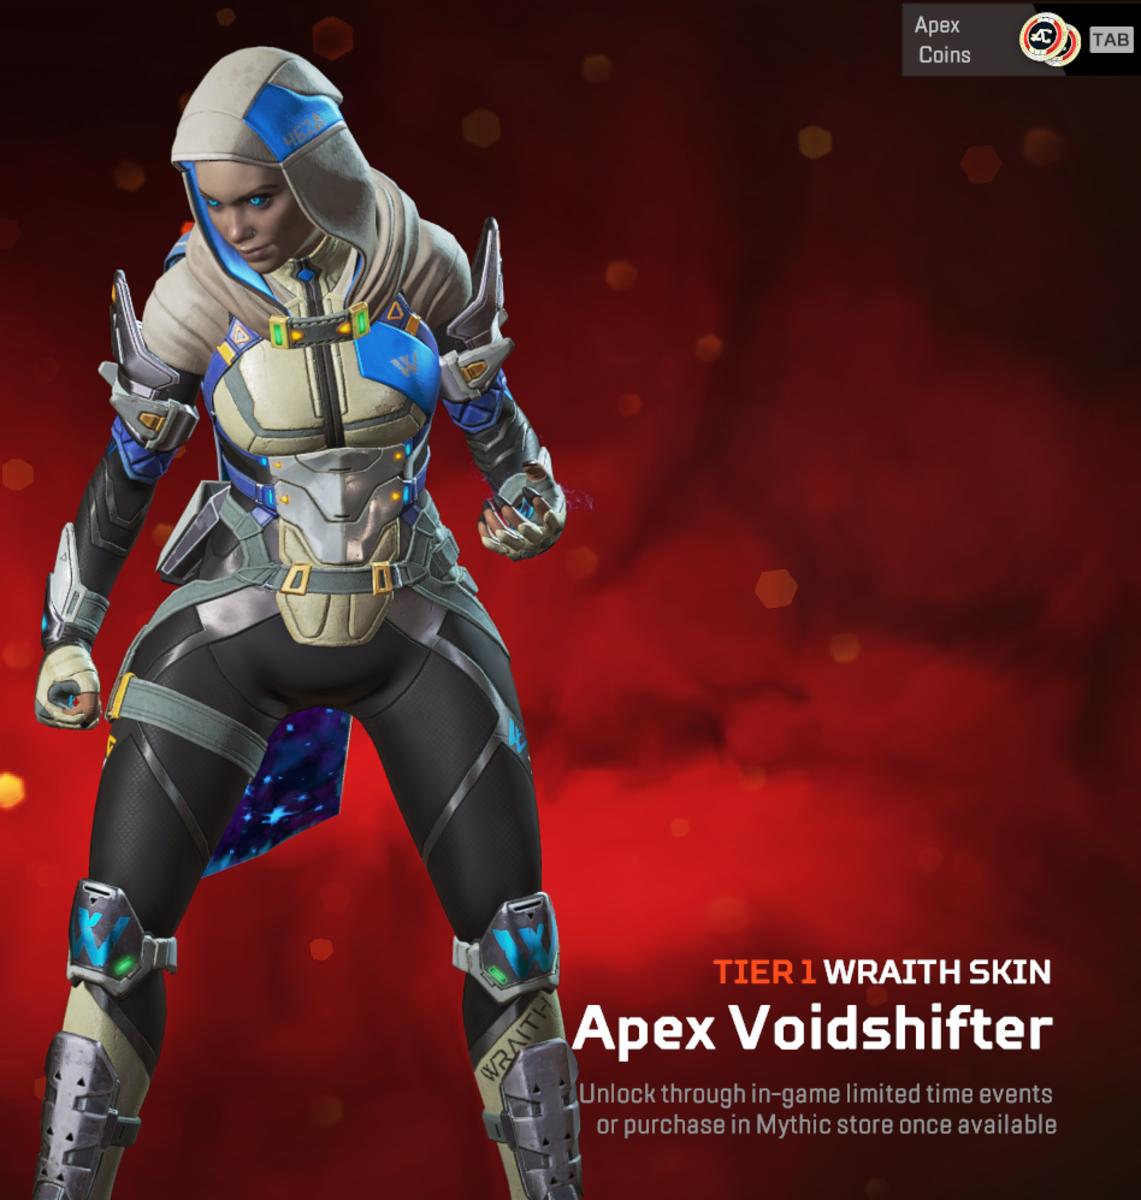 Apex Voidshifter Prestige Skin for Wraith in Apex Legends.